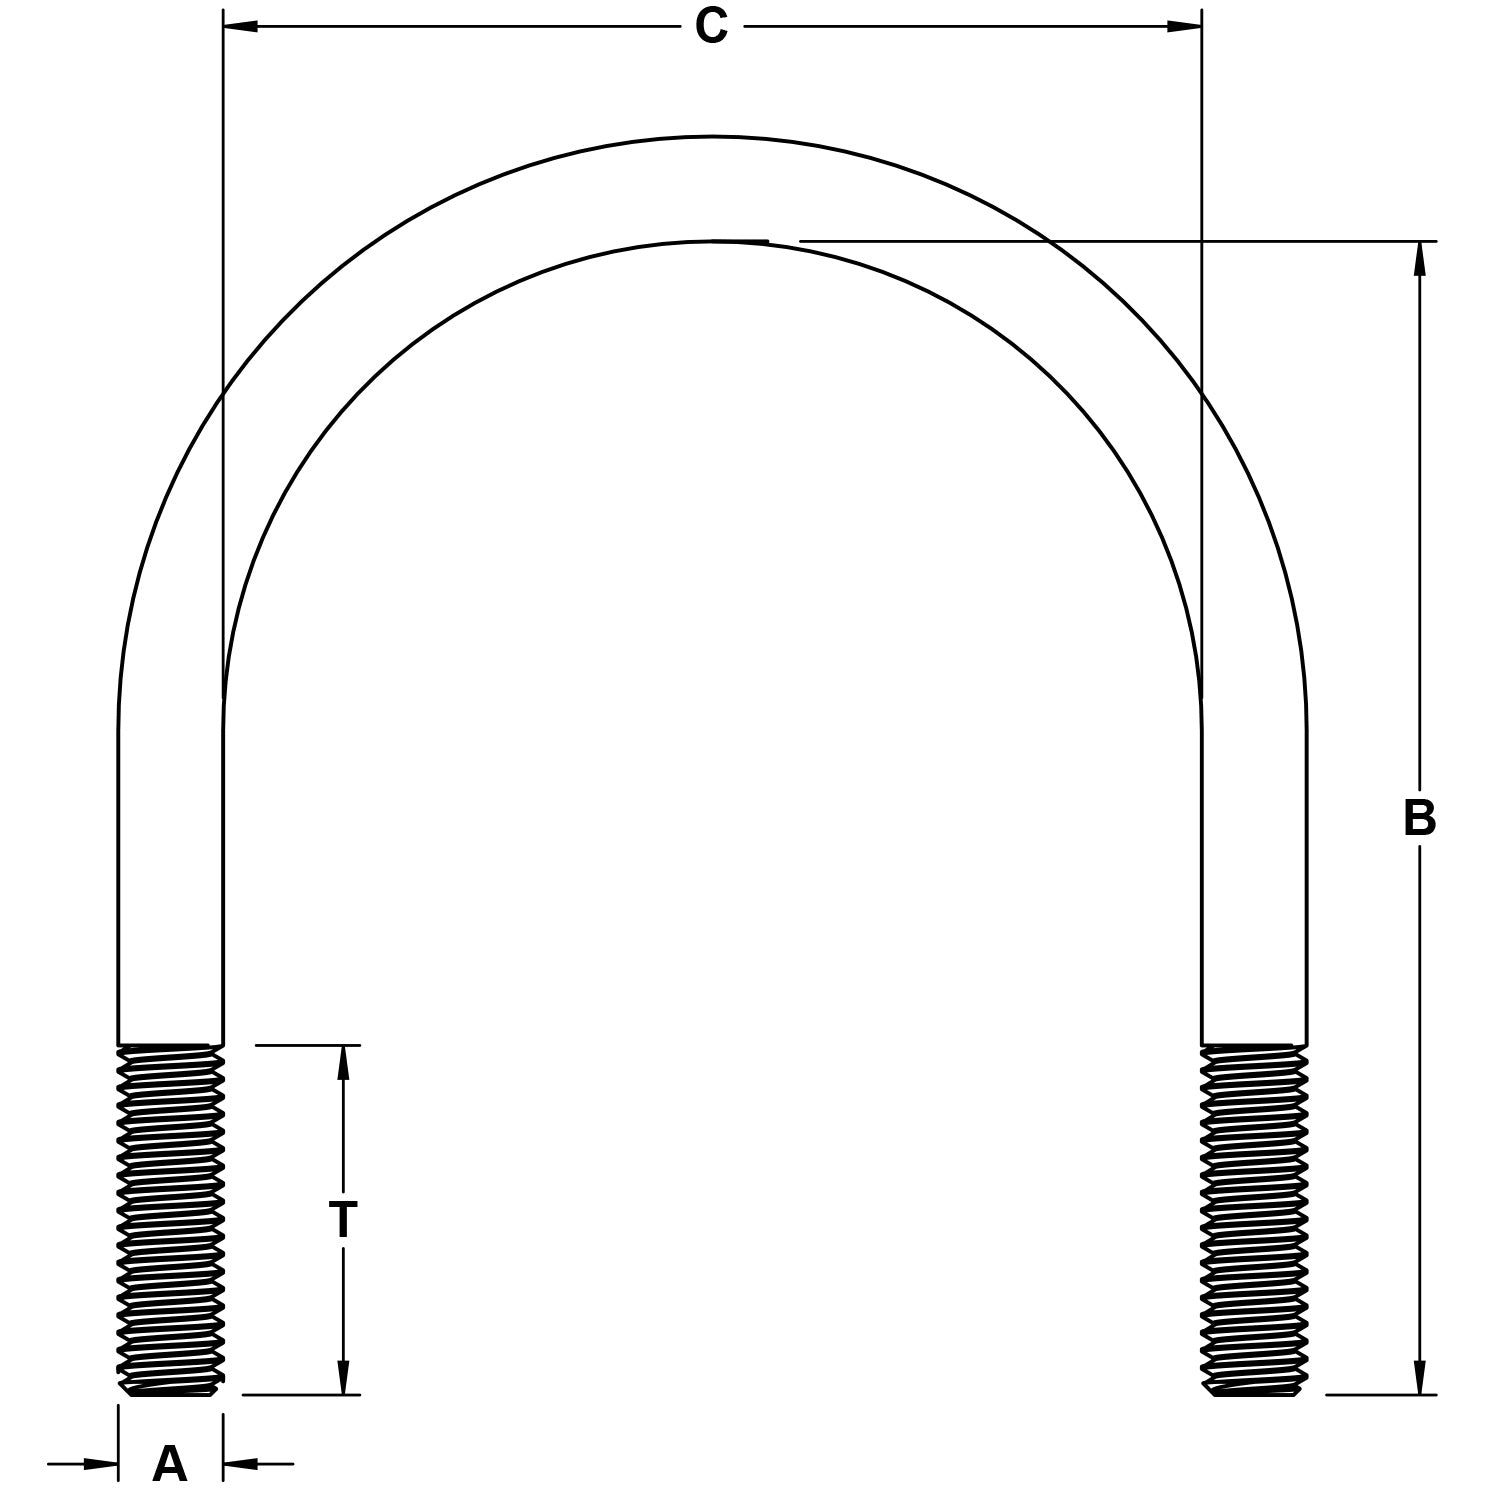 18g-chicago-hardware-hot-dip-galvanized-round-bend-u-bolt-with-plate-specs